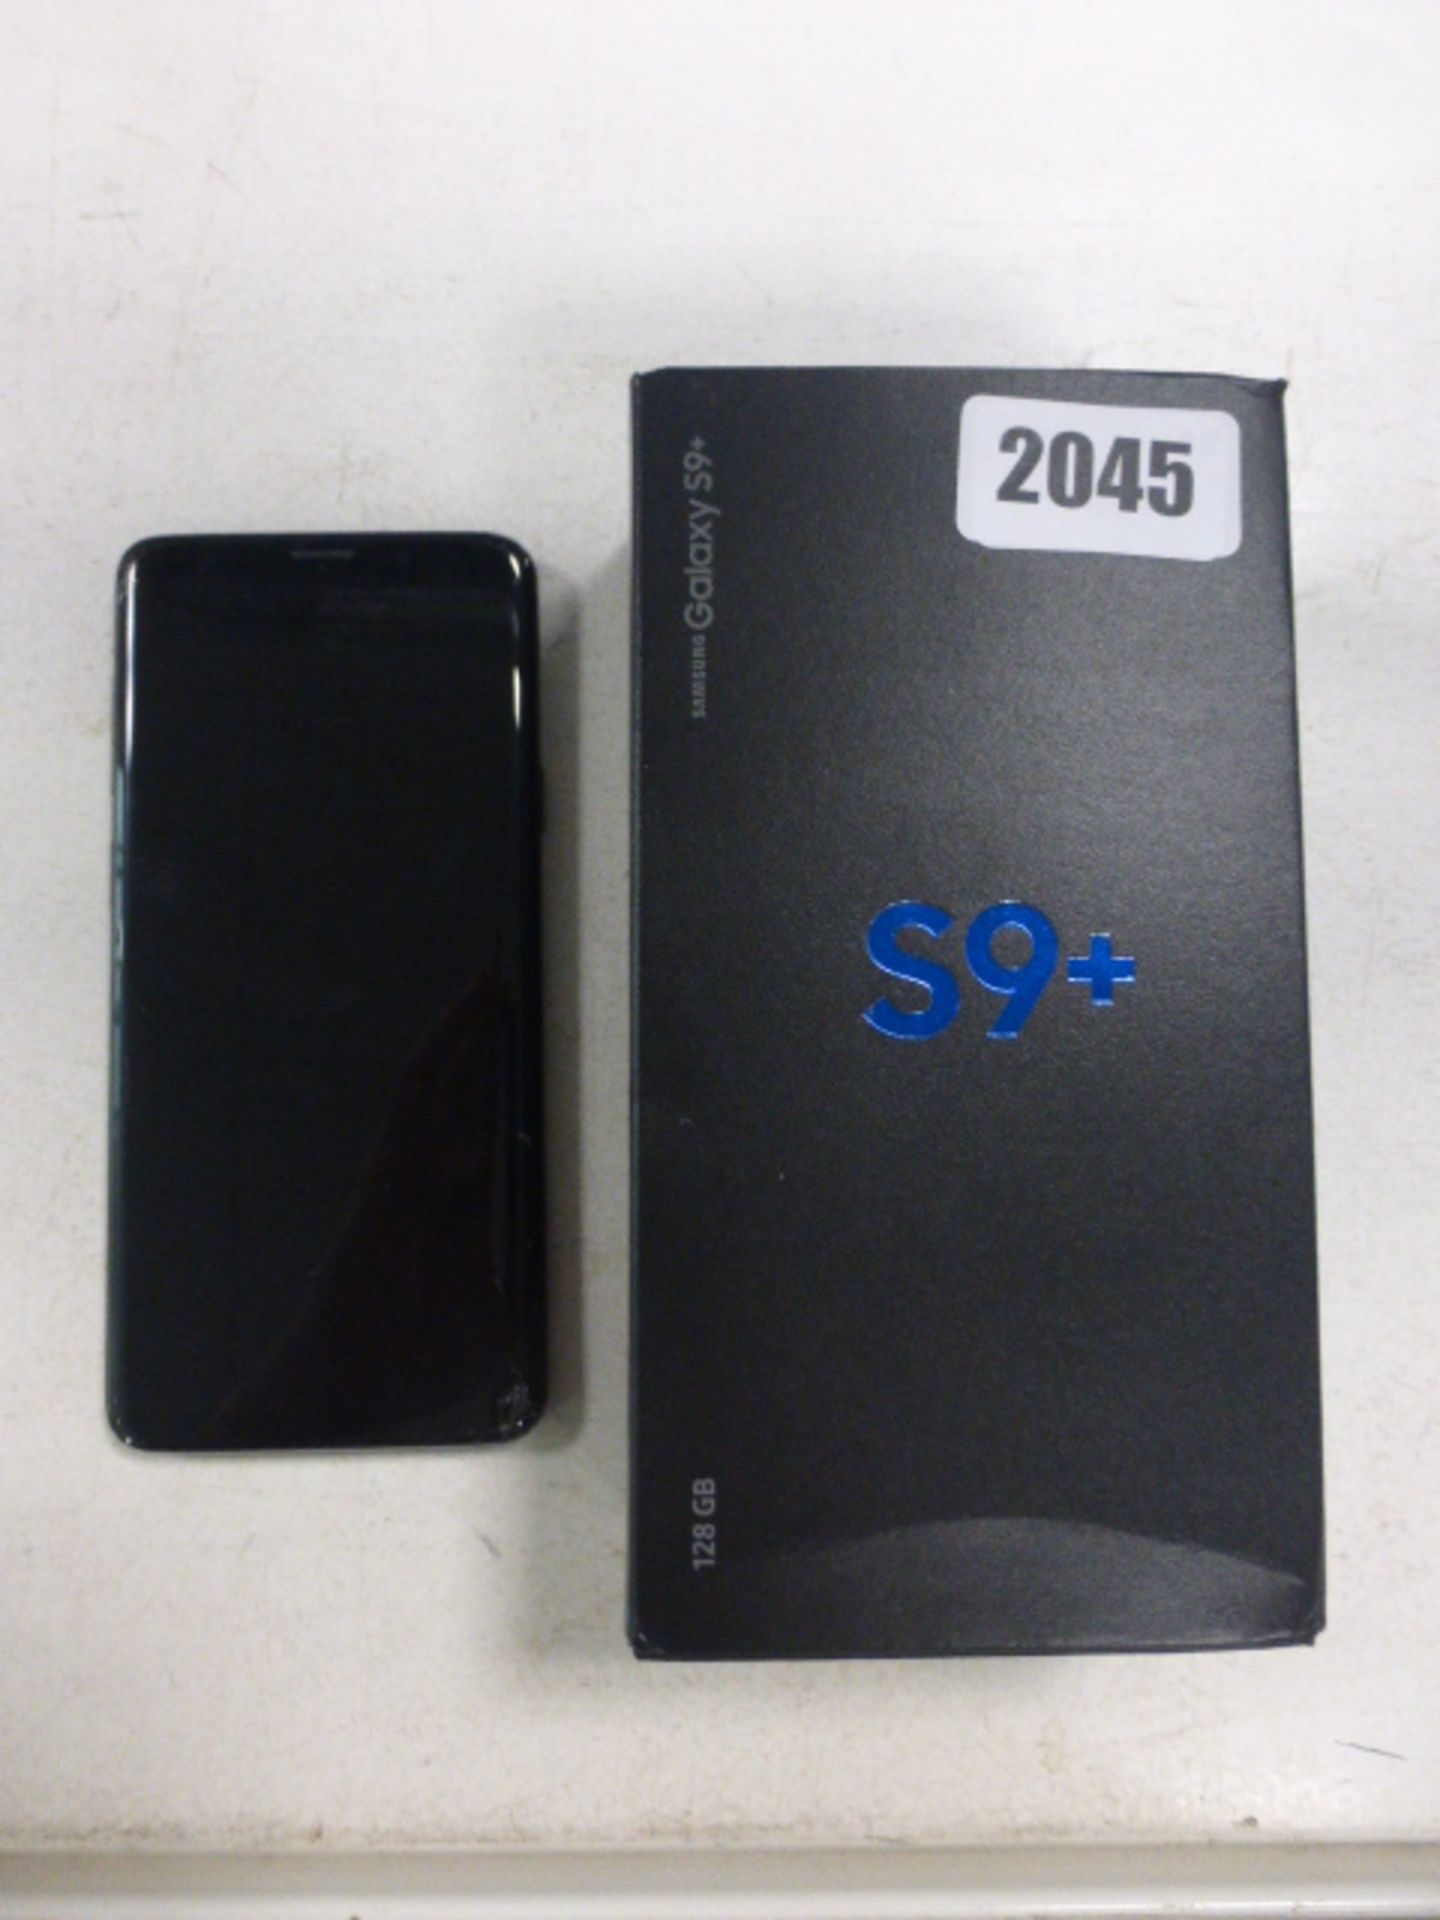 Samsung Galaxy S9 Plus mobile phone (damage to glass display)